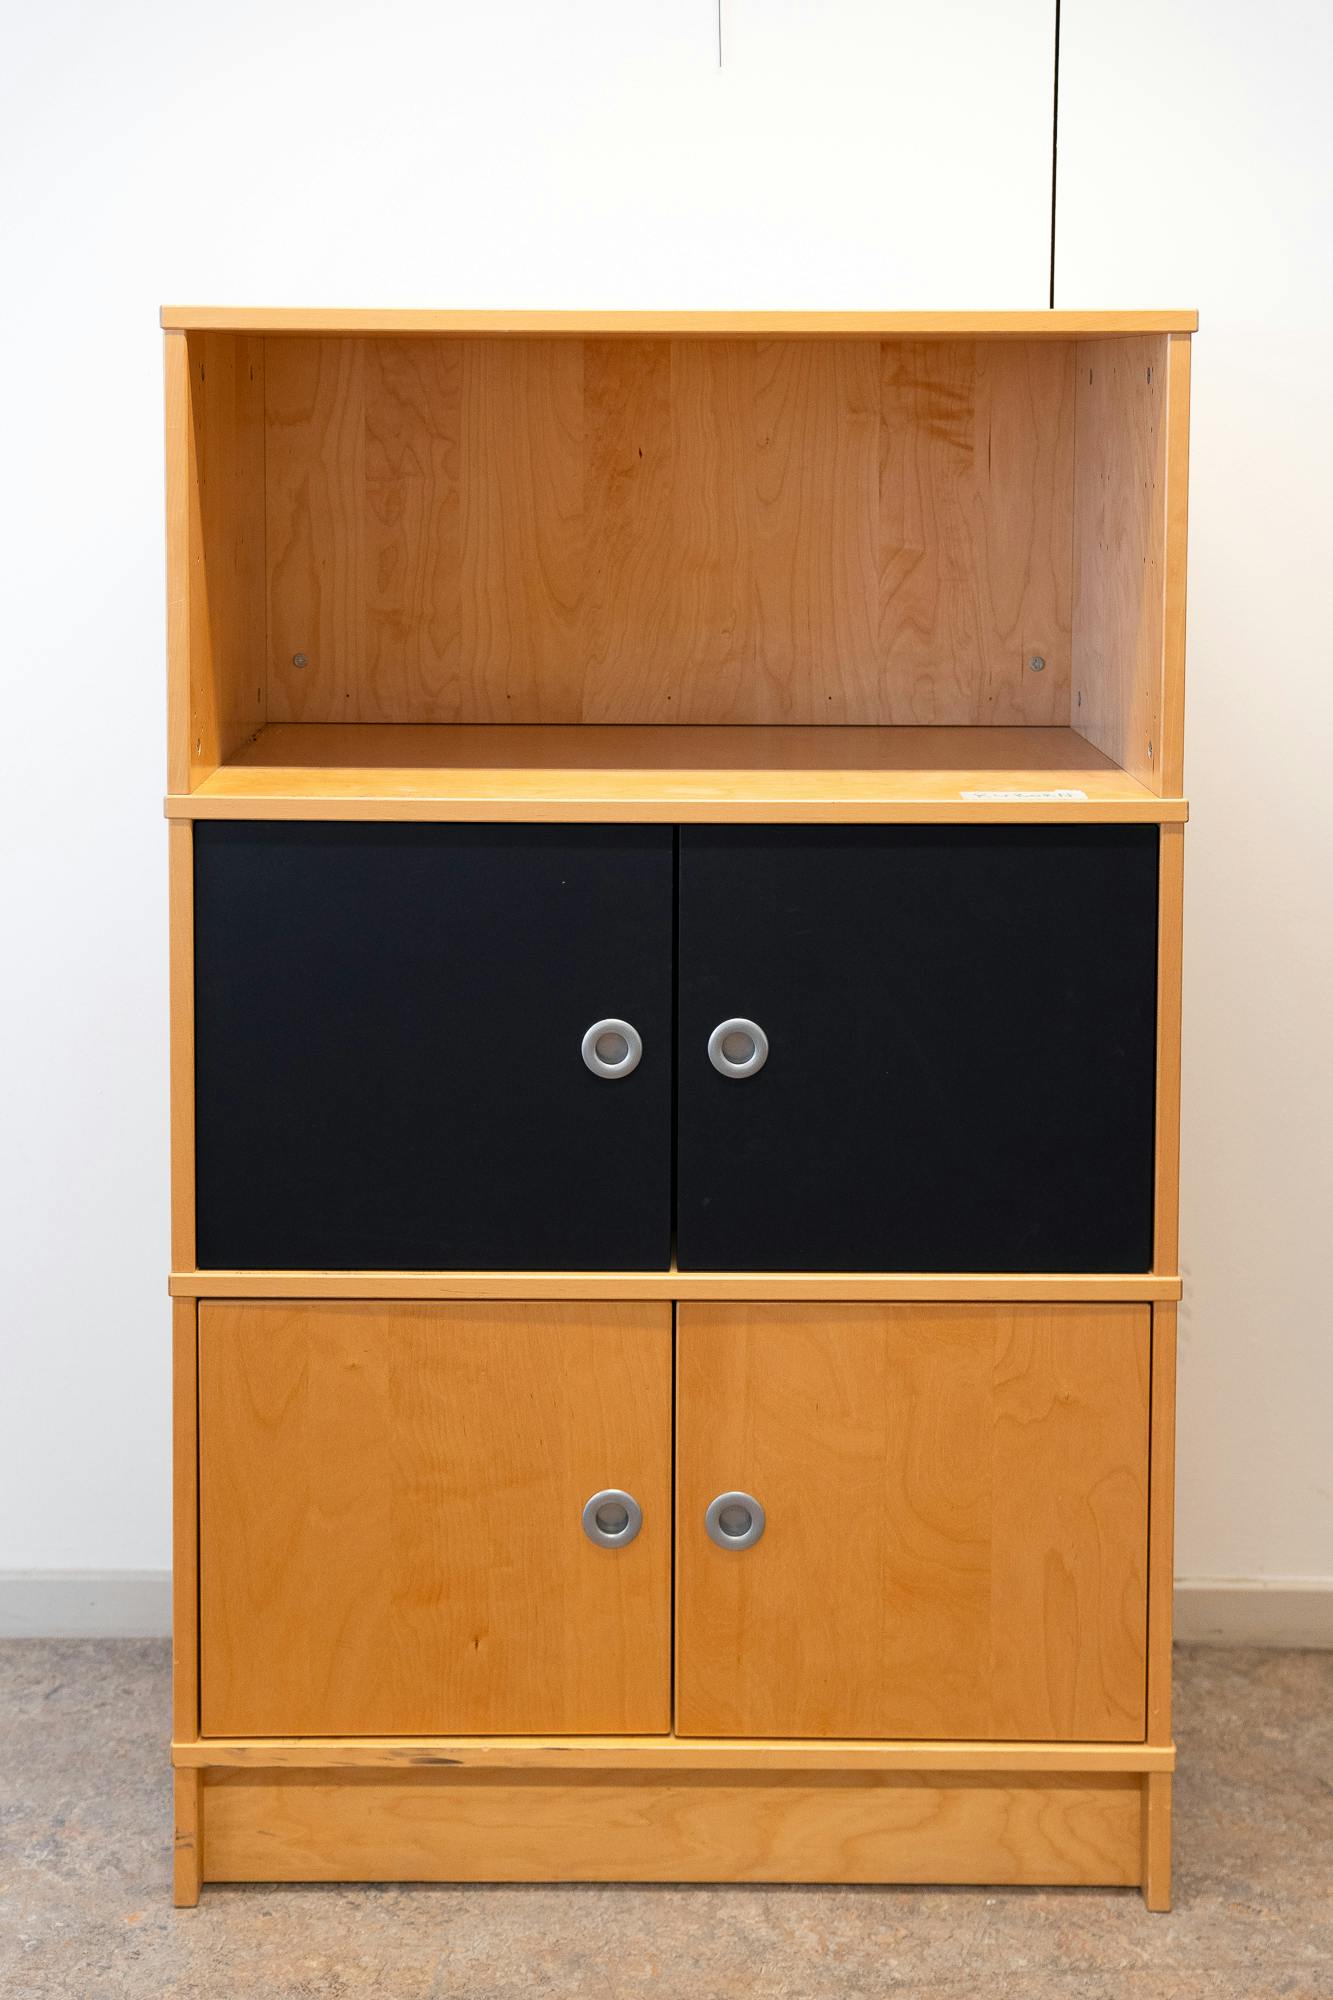 ikea wooden wardrobe - Second hand quality "Storage" - Relieve Furniture